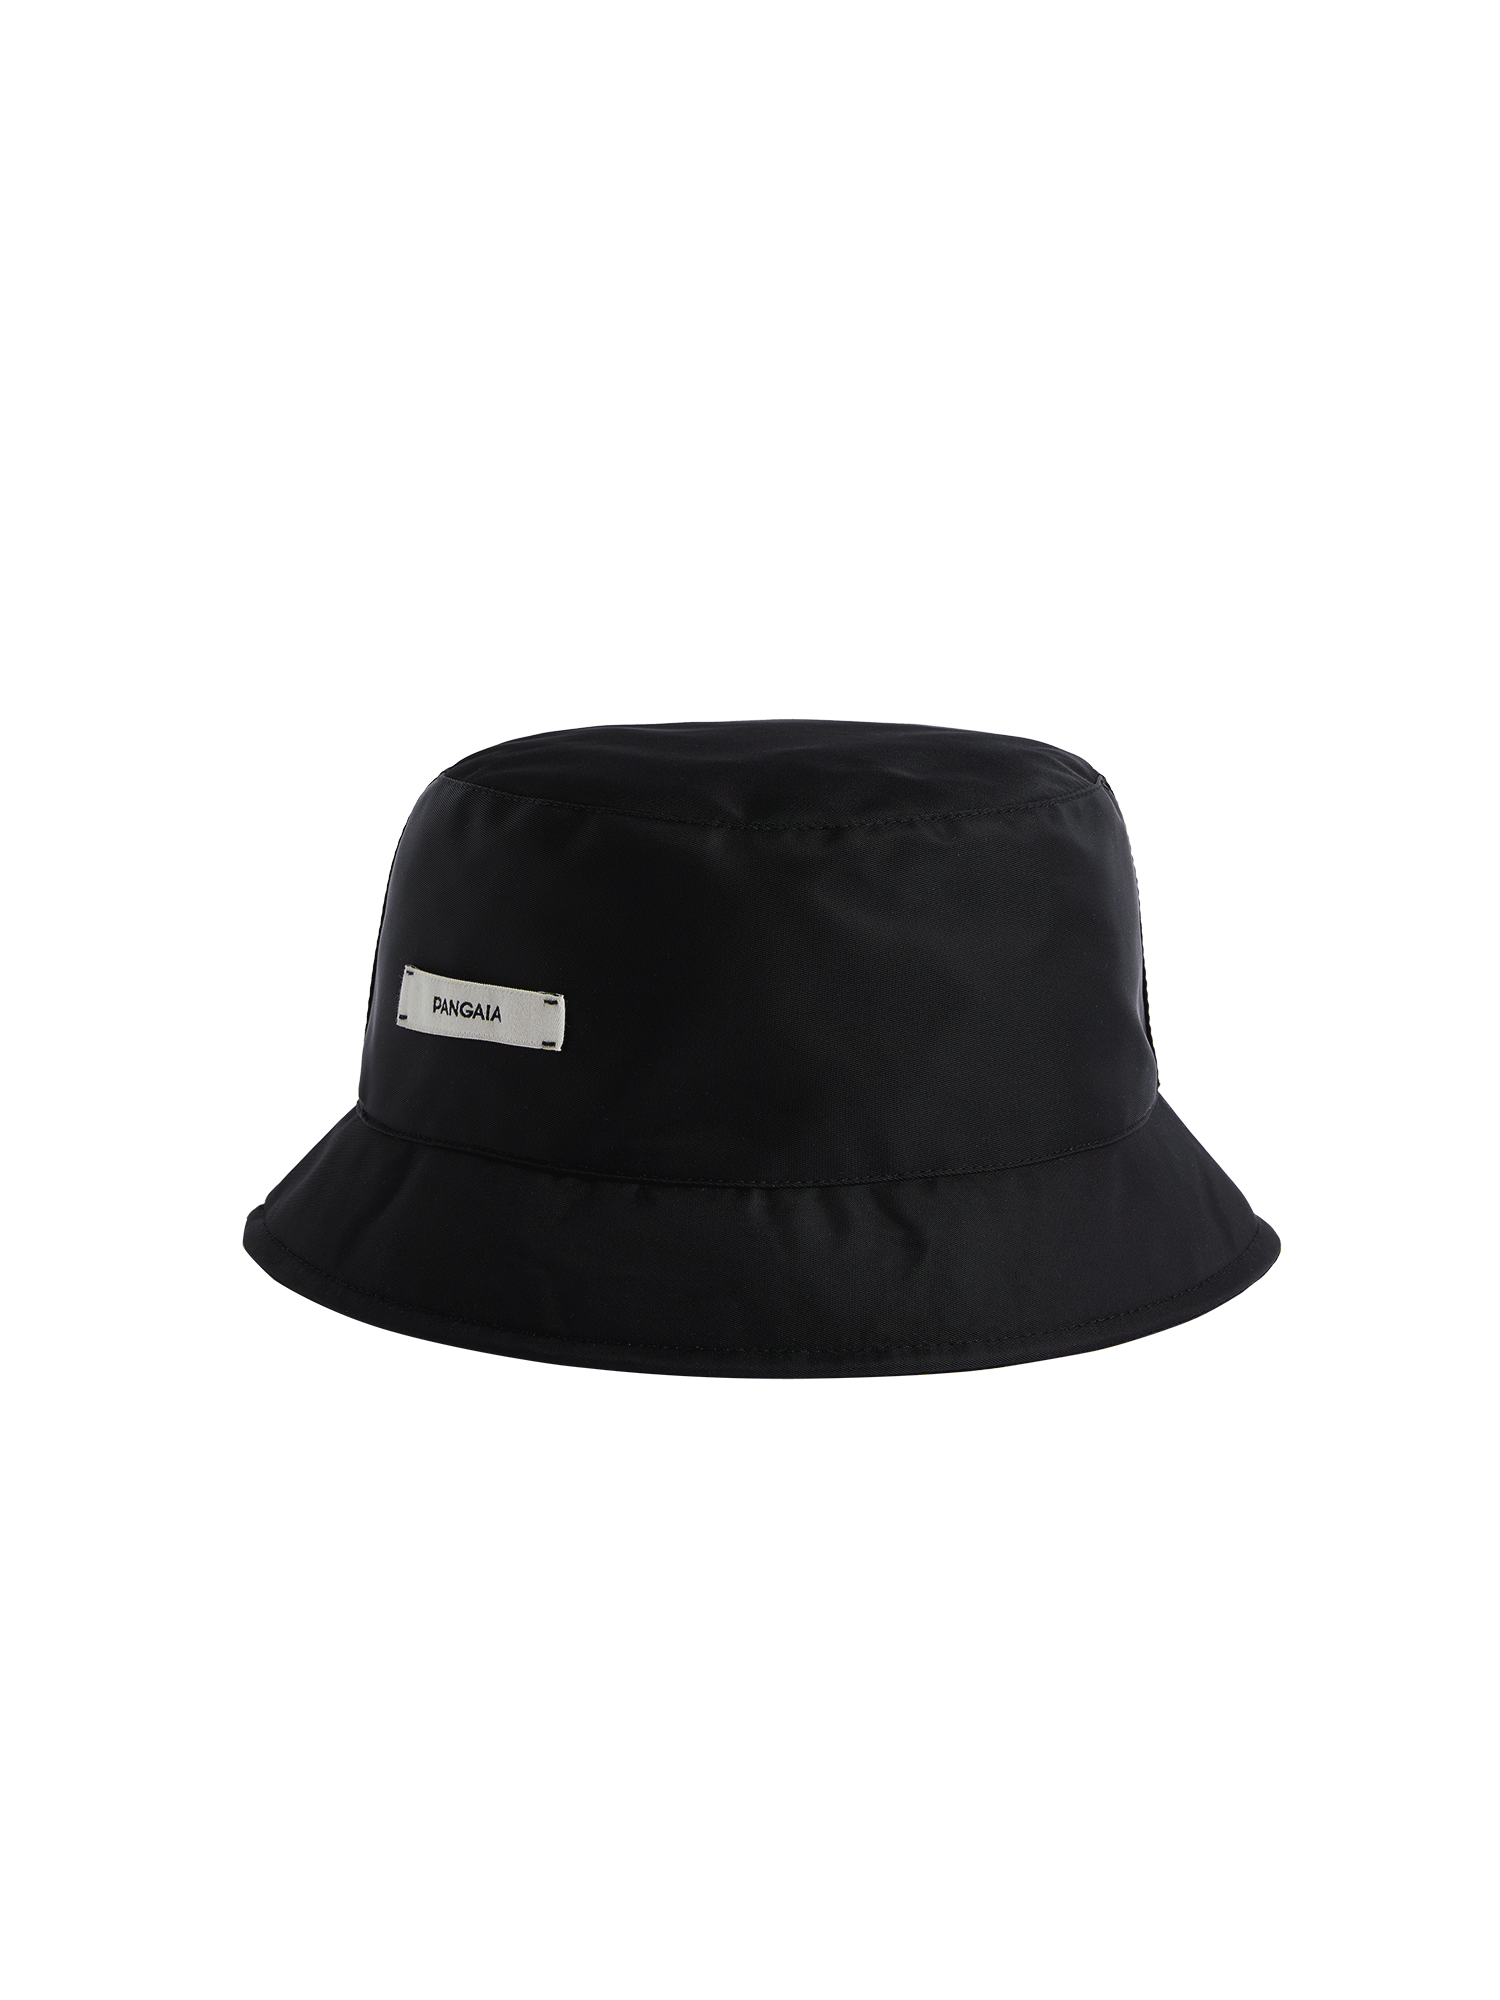 https://cdn.shopify.com/s/files/1/0035/1309/0115/products/Nylon-Bucket-Hat-Black-1.png?v=1662475847